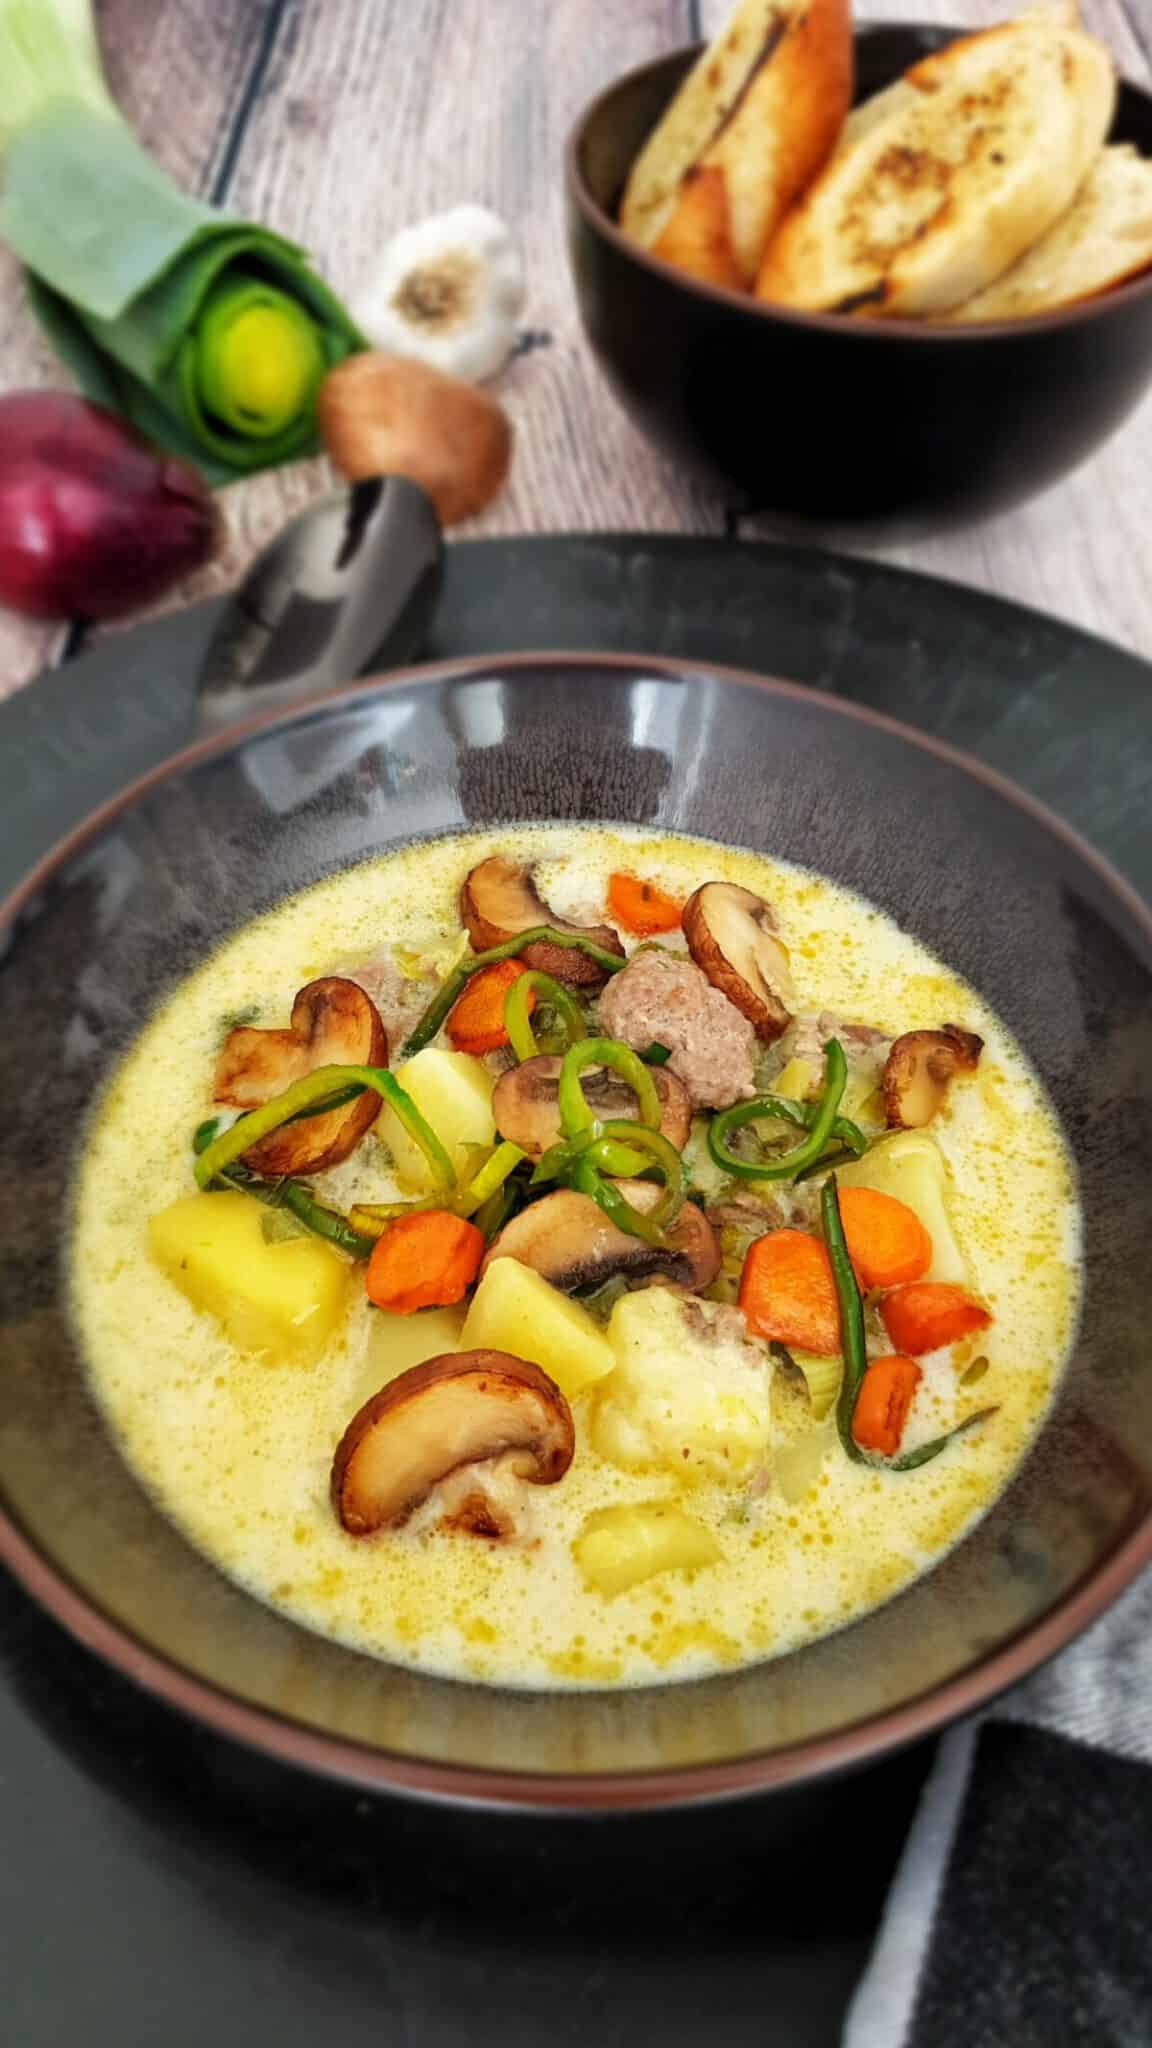 Käse-Lauch-Suppe mit Hackbällchen - Lydiasfoodblog